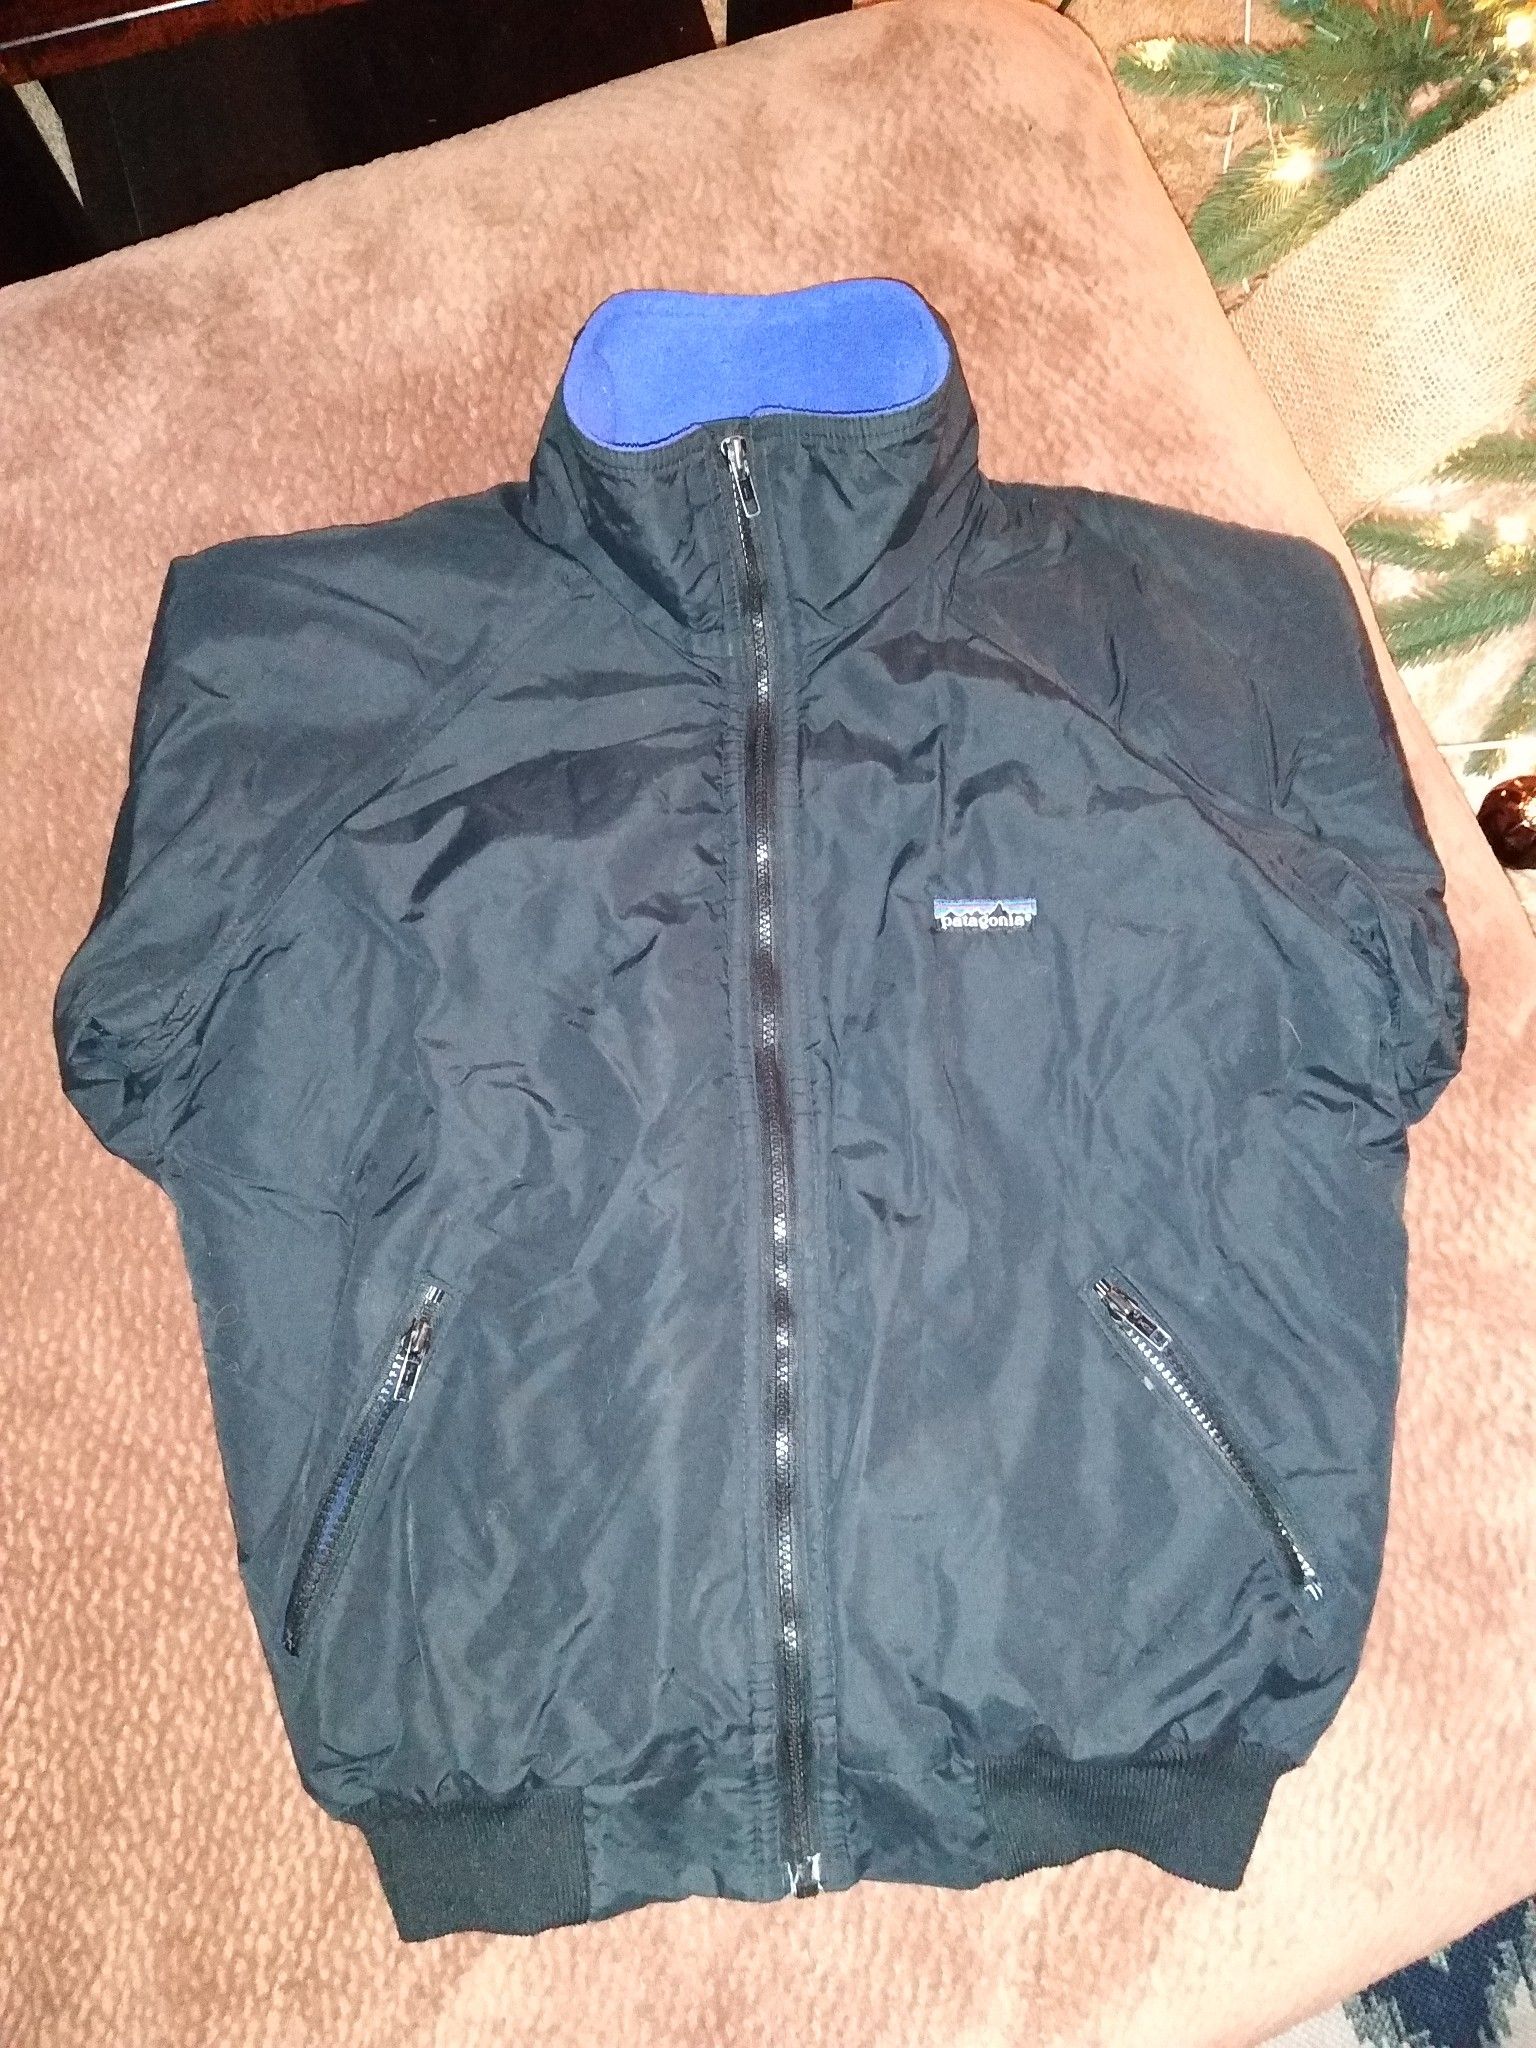 Patagonia fleece lined bomber jacket